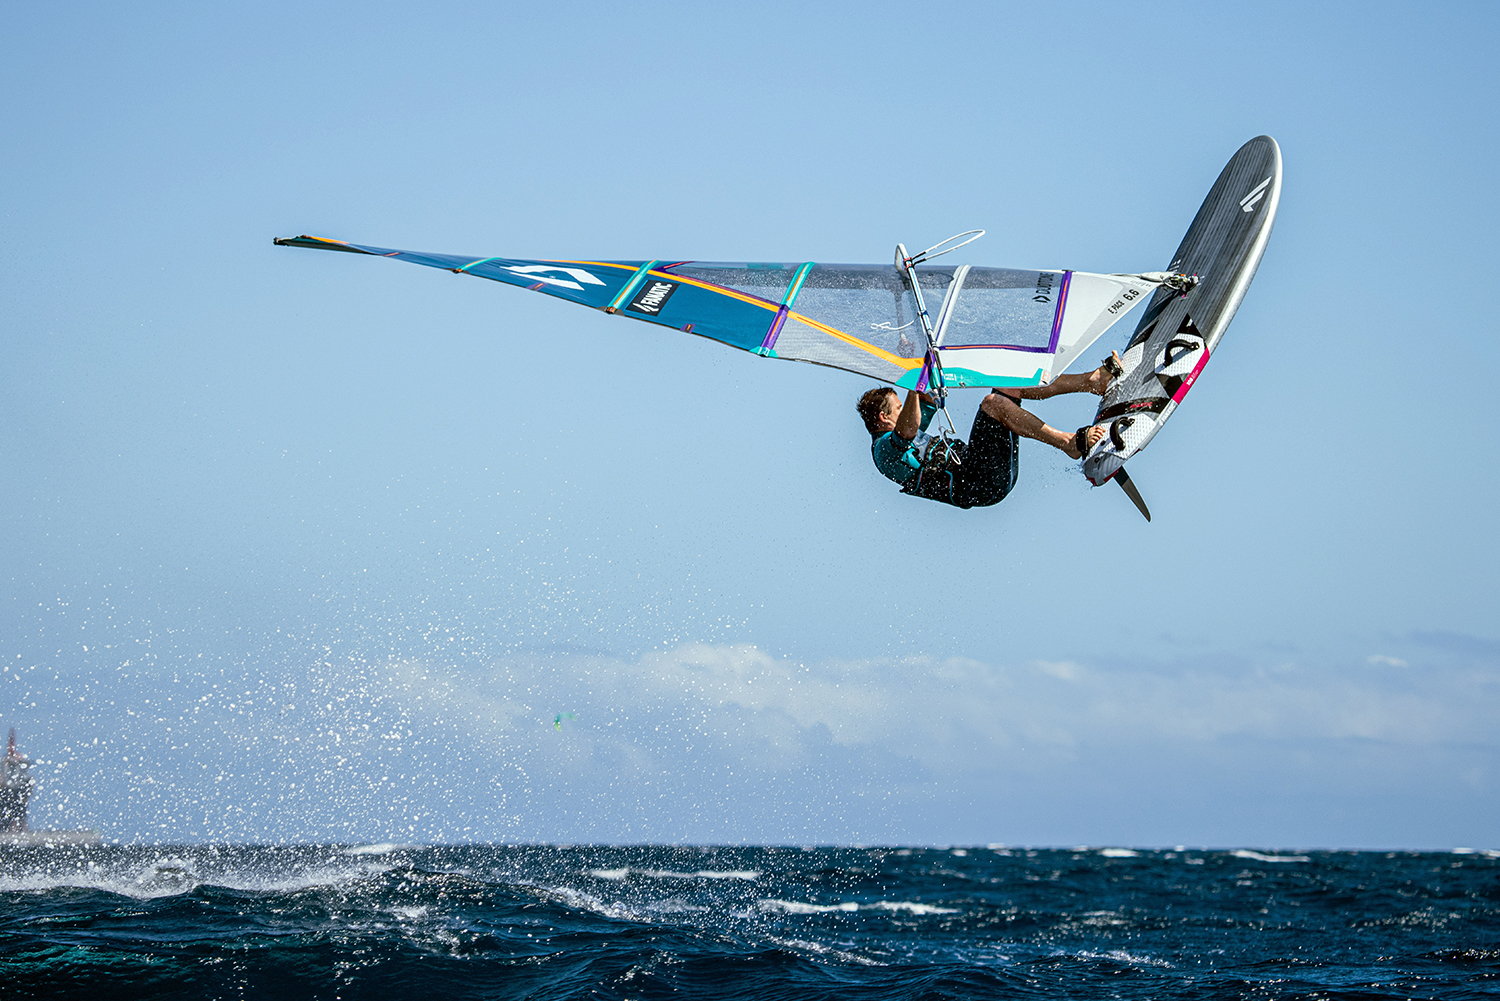 Marco flying high in Tenerife